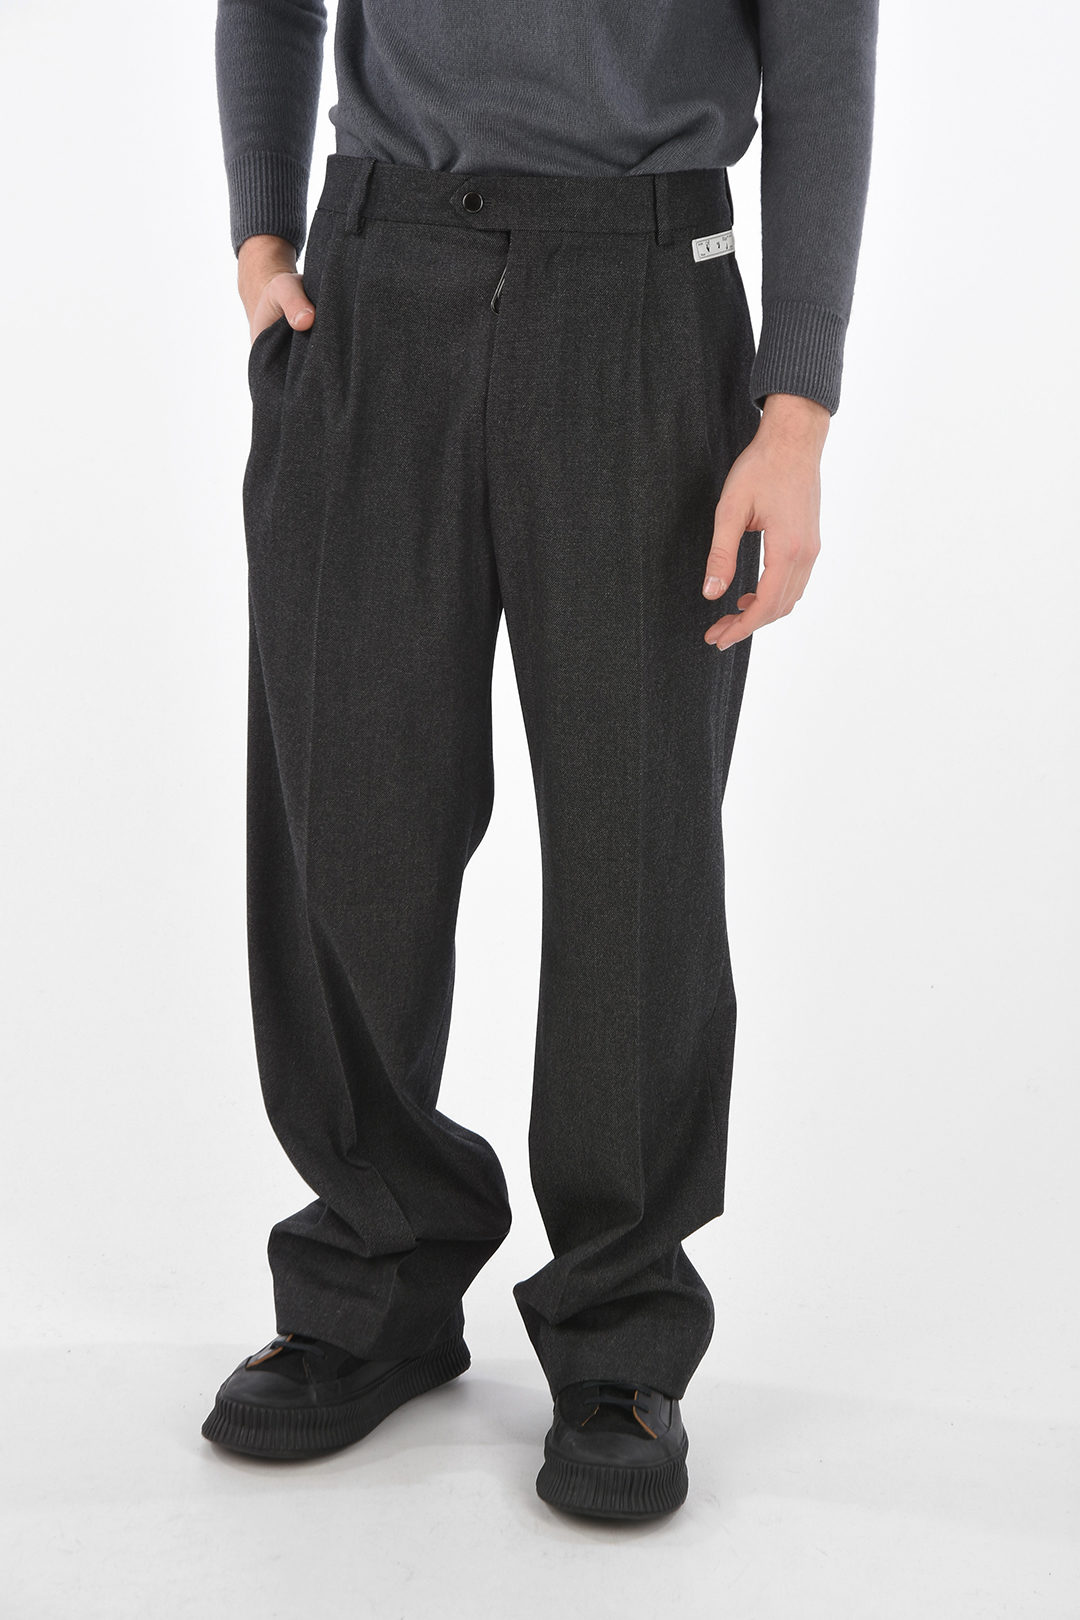 100% Wool Pants Comparison | Johnson Woolen Mills & Big Bill Workwear -  YouTube